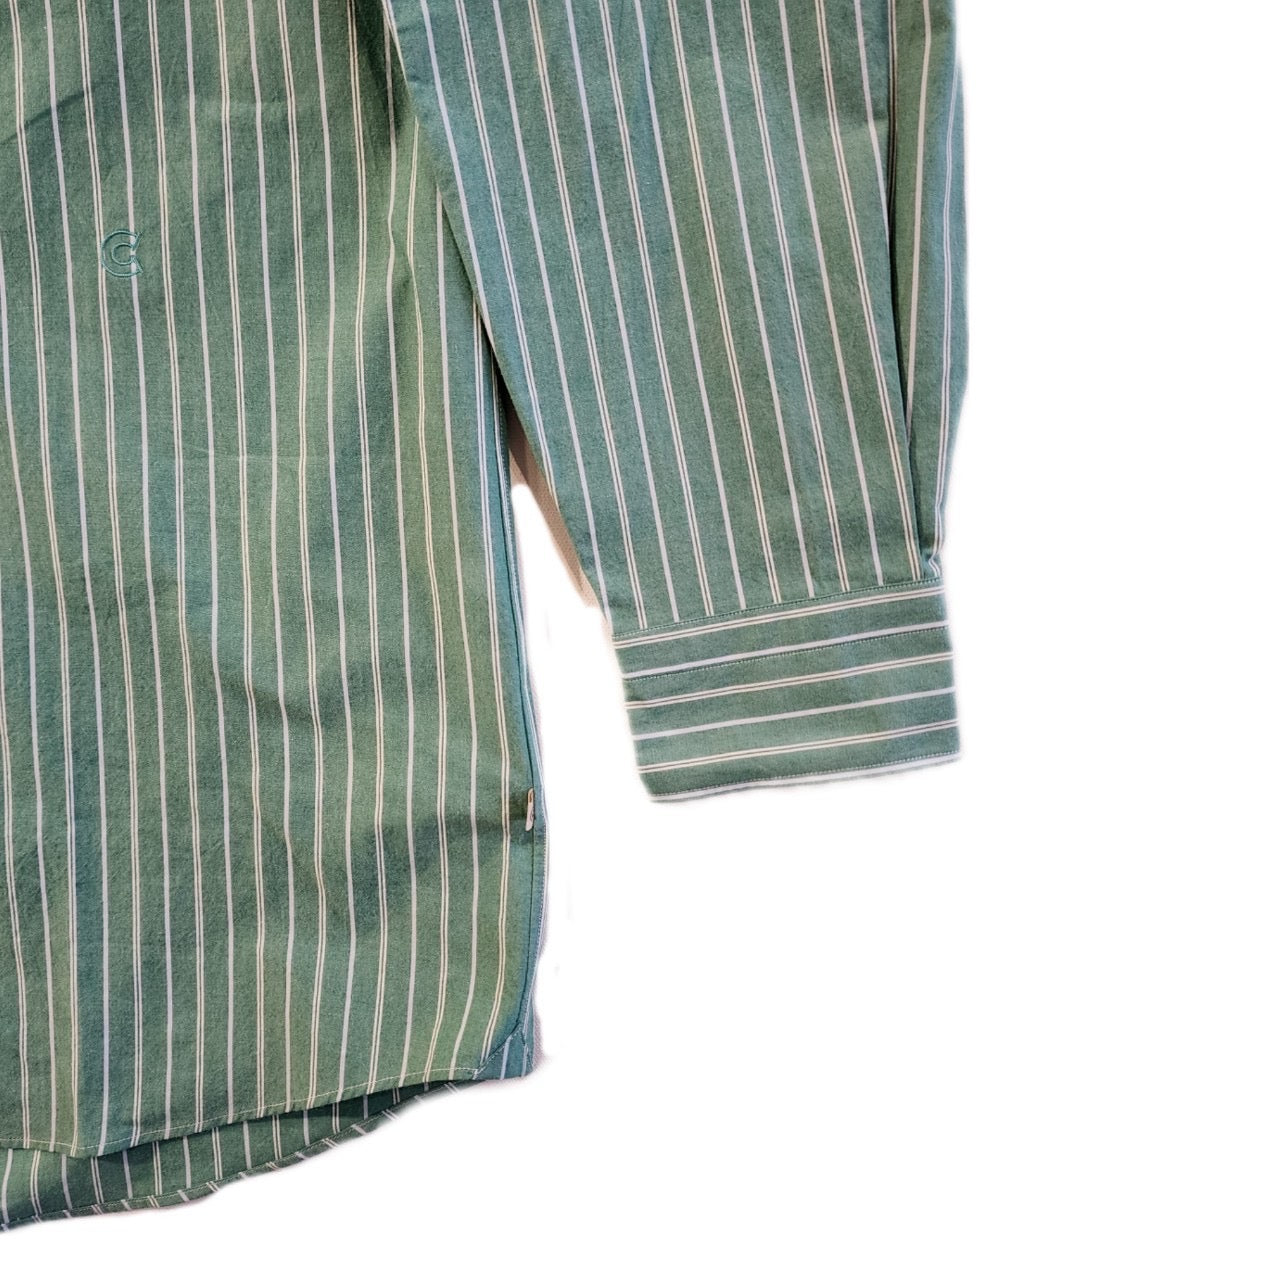 COLONY CLOTHING / グリーンストライプ ラウンジシャツ / CC2401-SH03-01